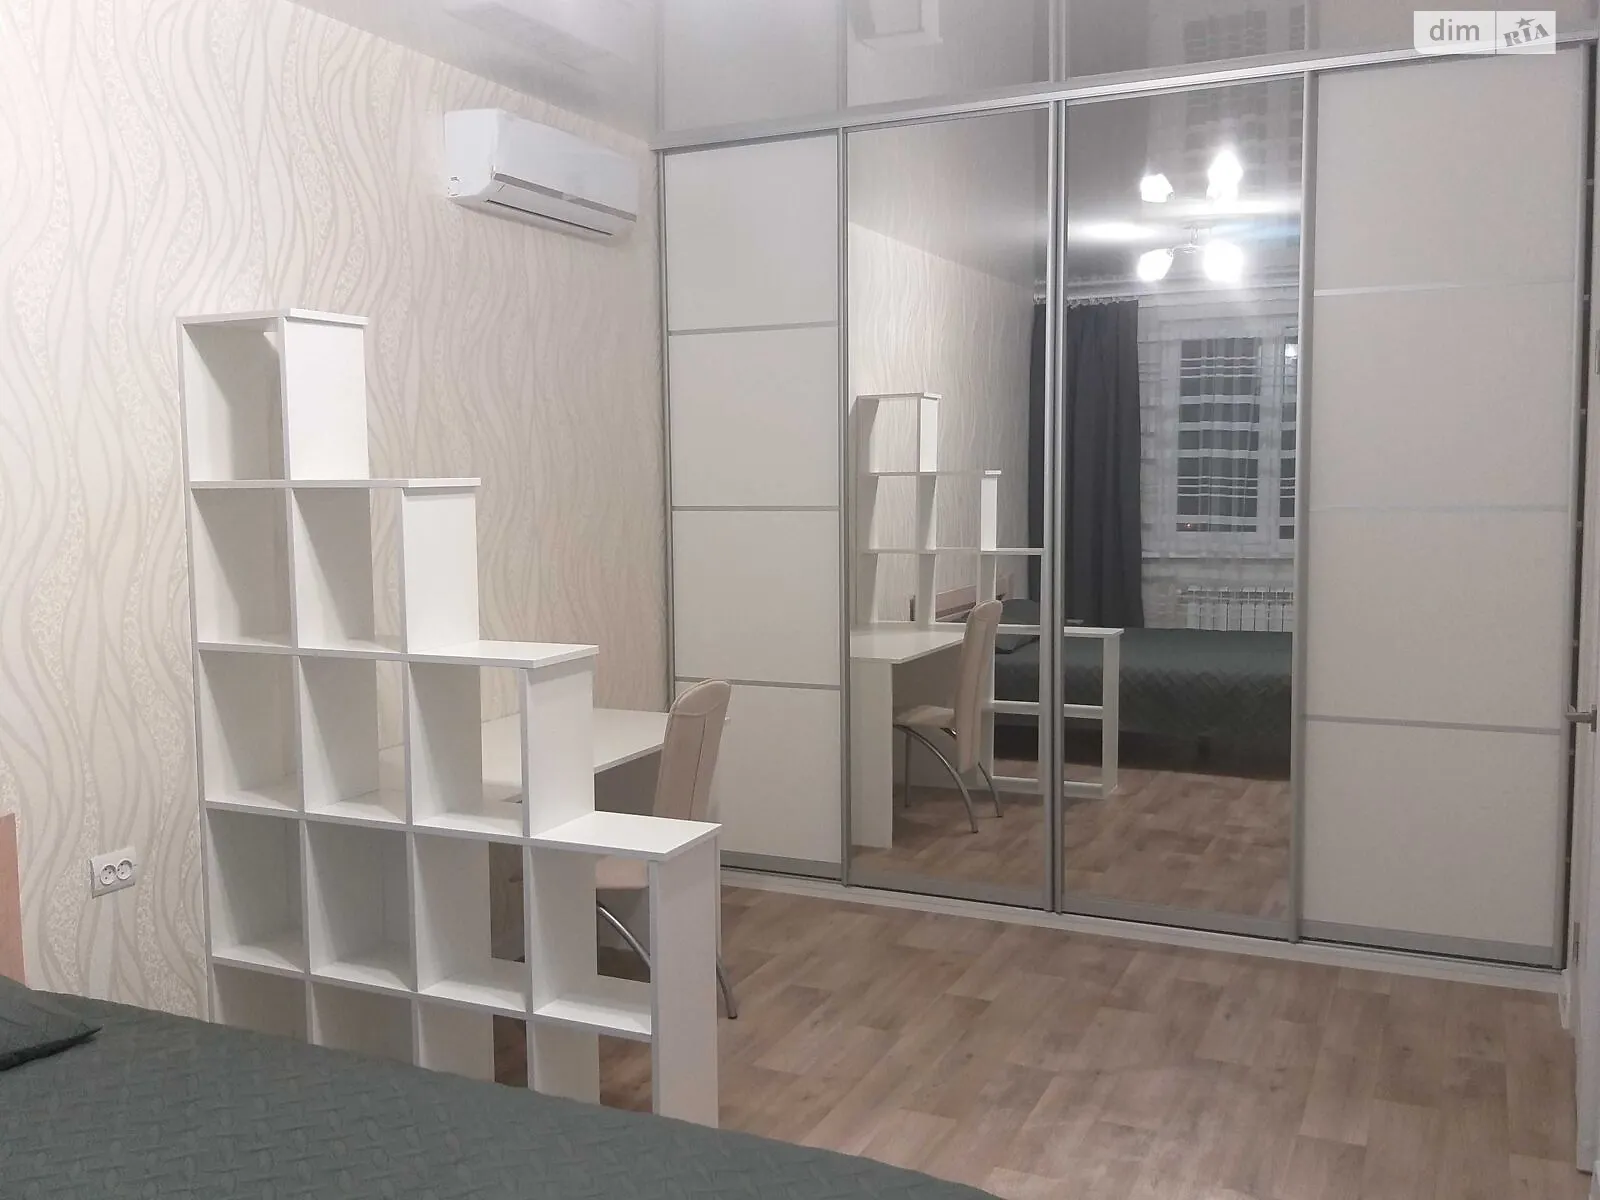 Сдается в аренду 1-комнатная квартира 37 кв. м в Харькове, ул. Козакевича, 25 - фото 1